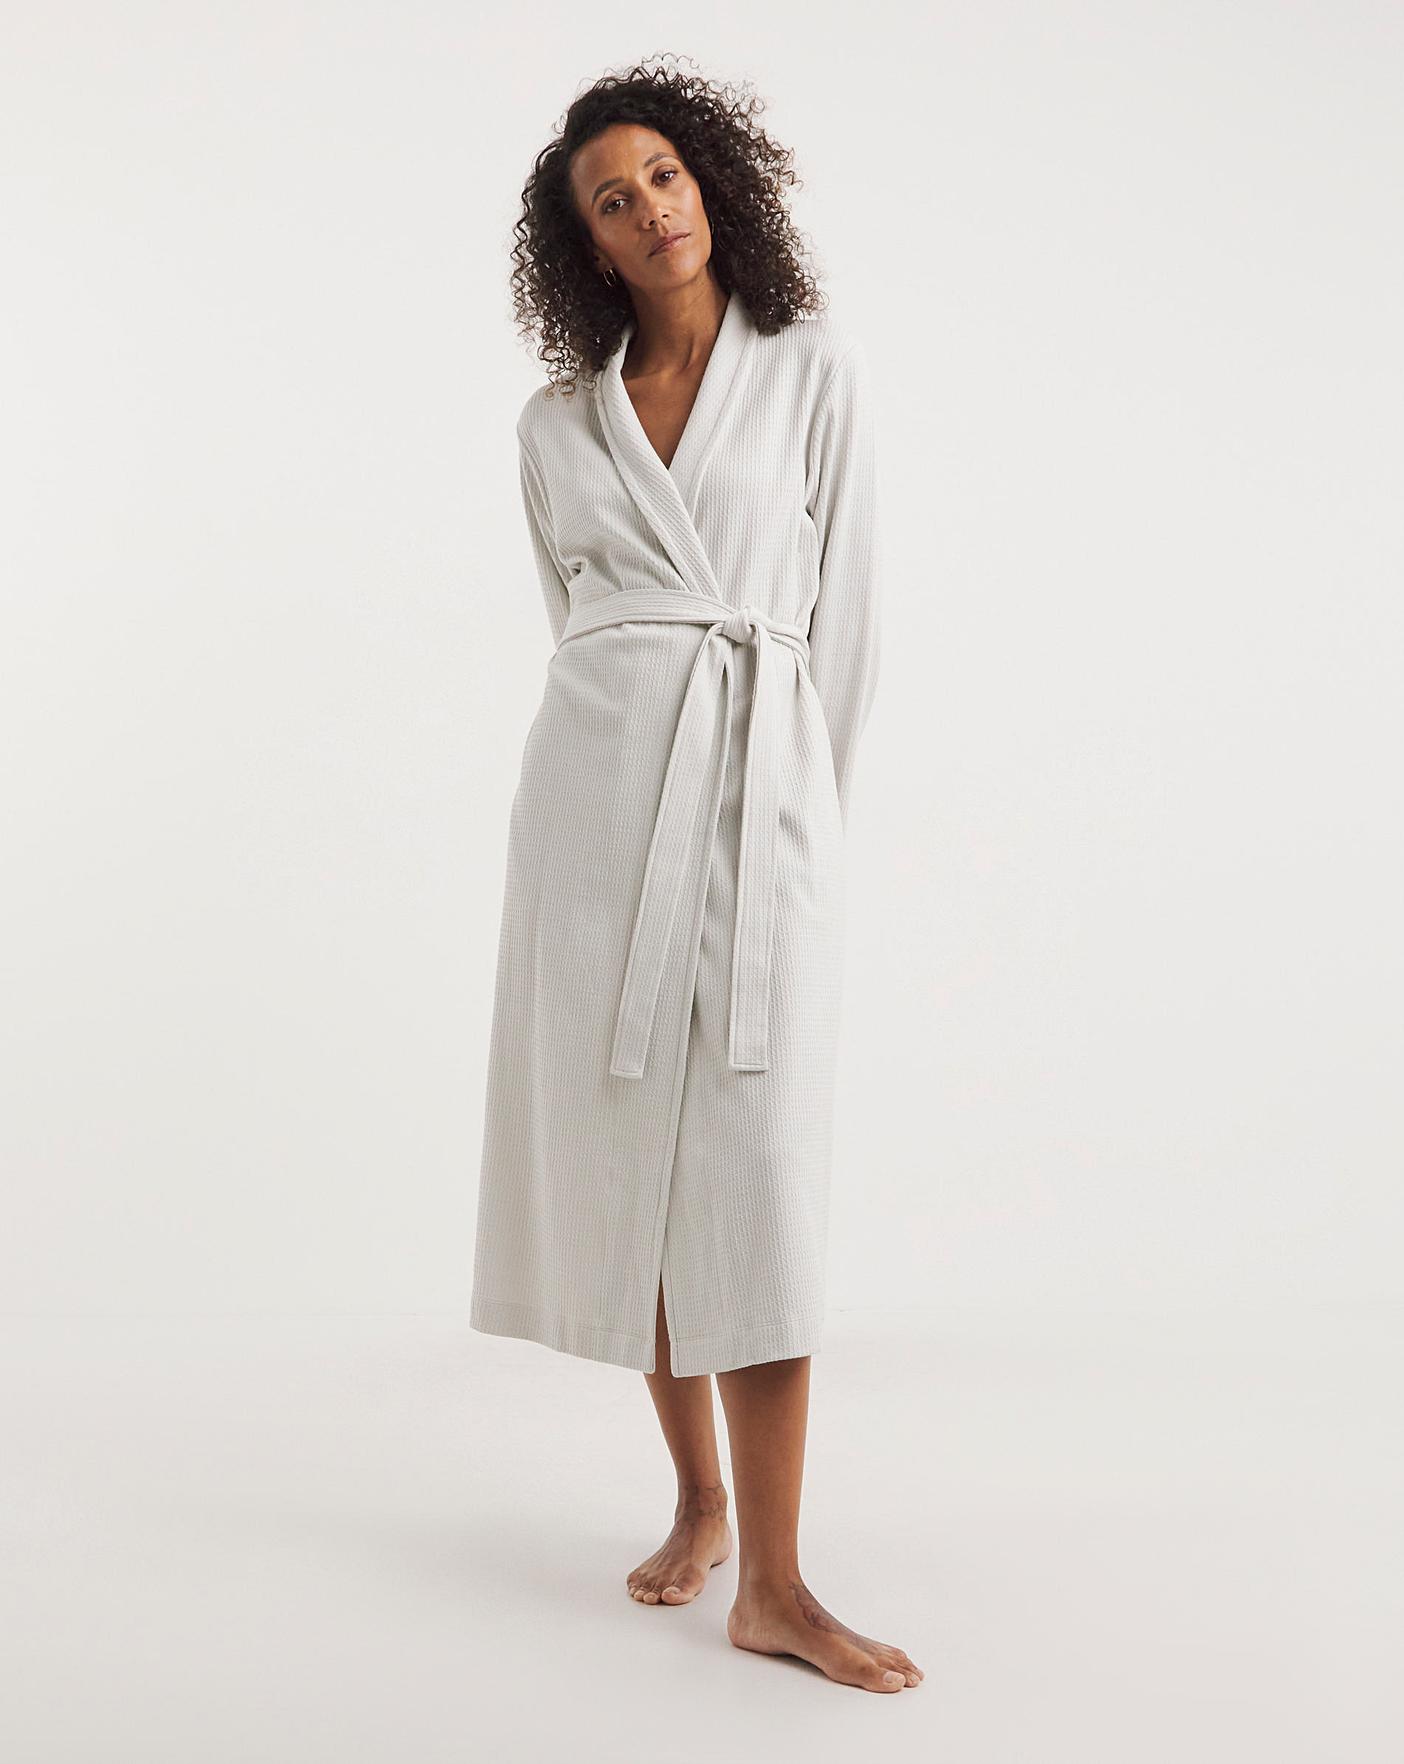 Buy Sanddune Mens Bathrobe |100% Terry Cotton Shower Gown | short Sleeve  Knee Length Gents Bath Robes | Pocket with Waist belt Mens Bathrobes | Grey  Bathrobe - Large Size Online at